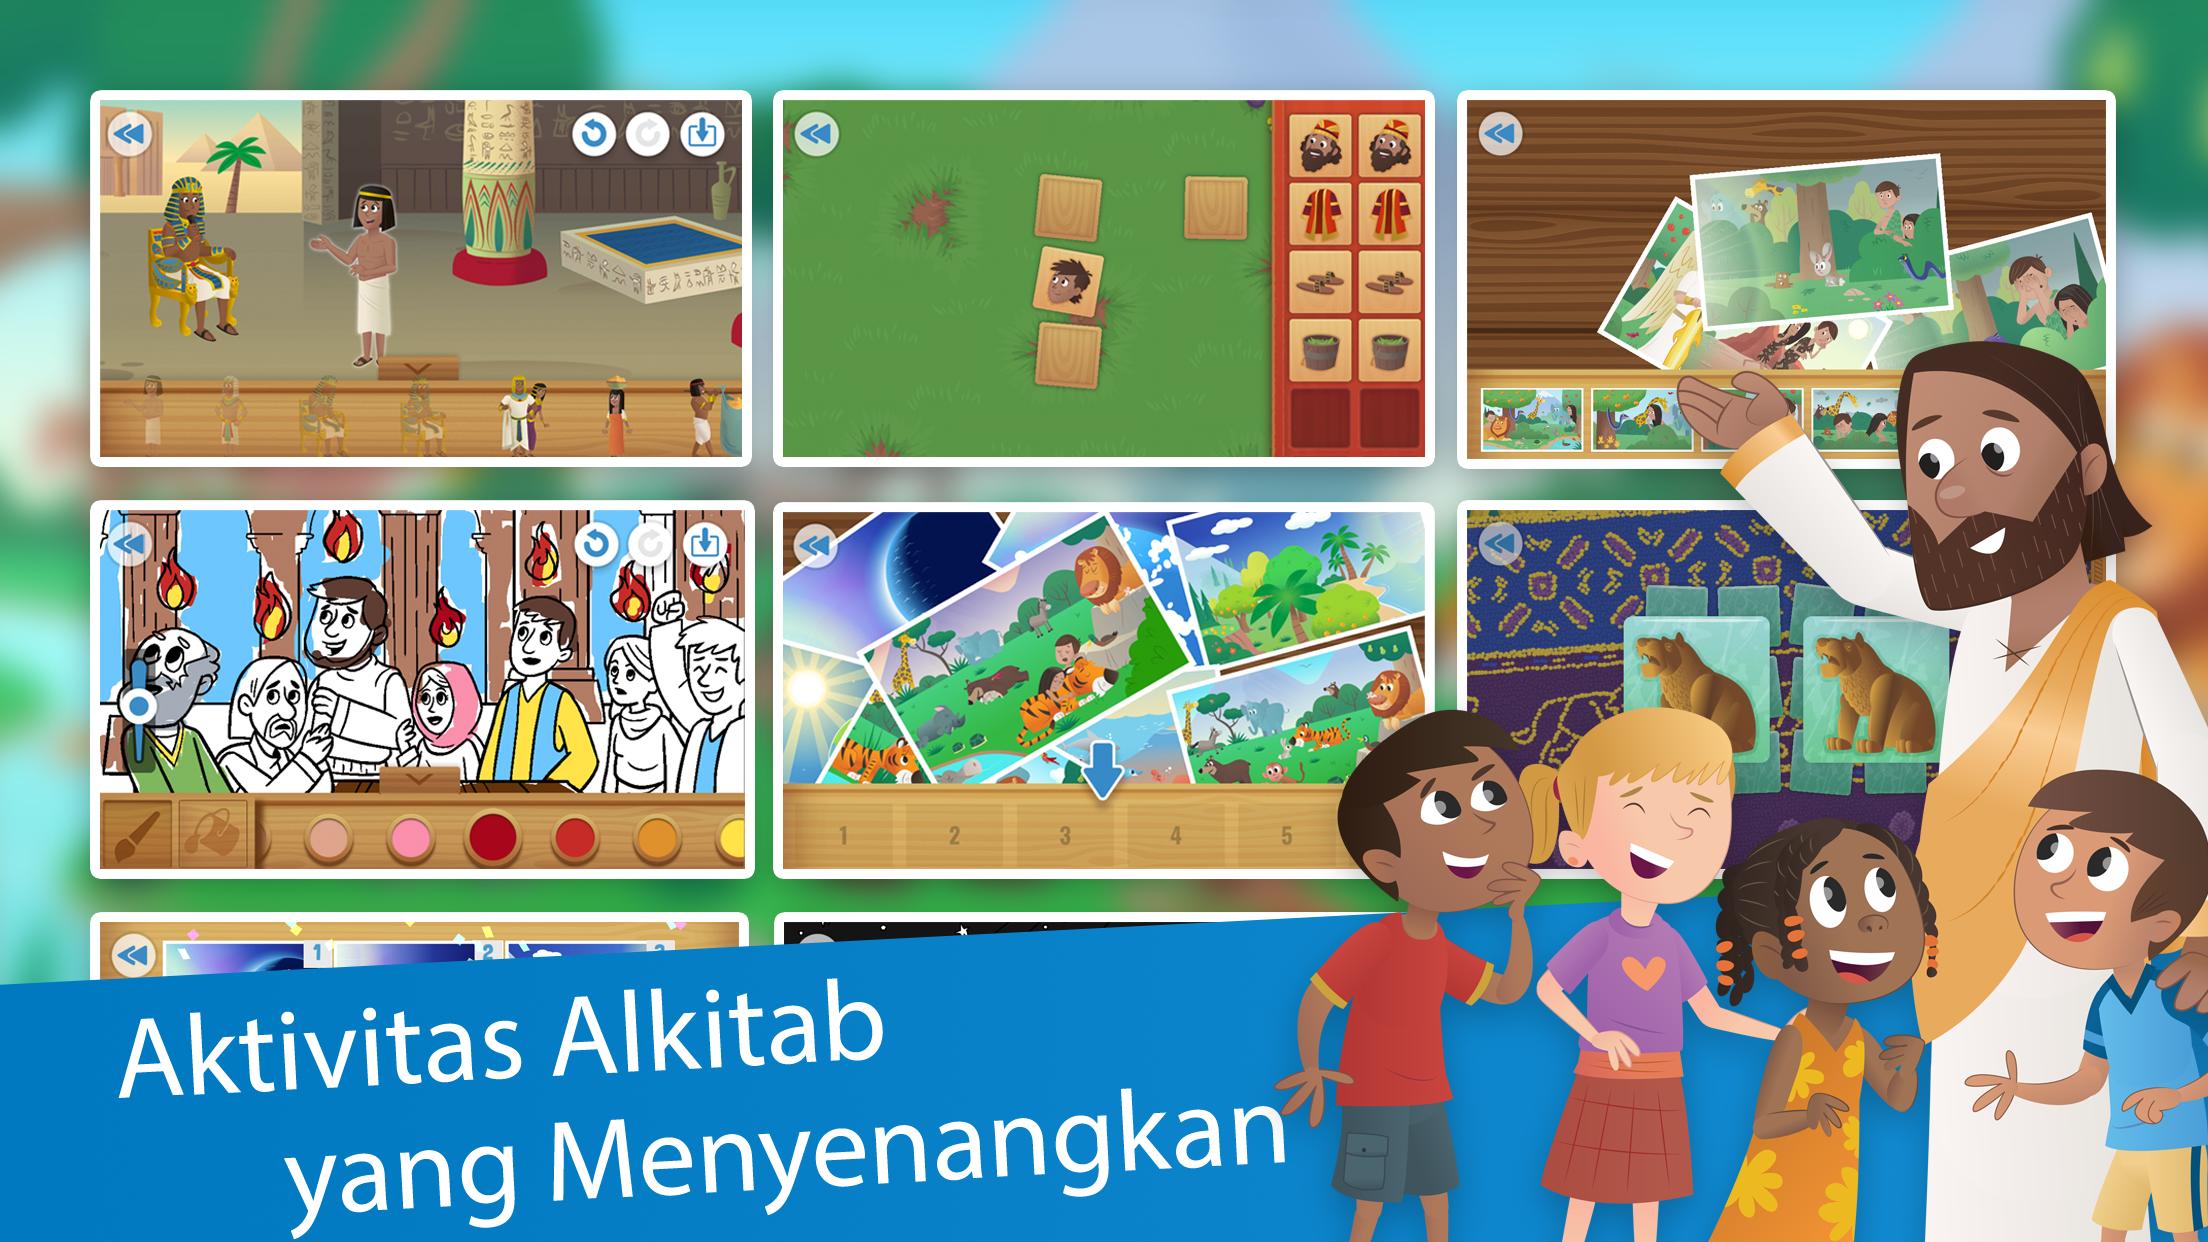 Aplikasi Alkitab Anak Anak Cerita Animasi For Android Apk Download